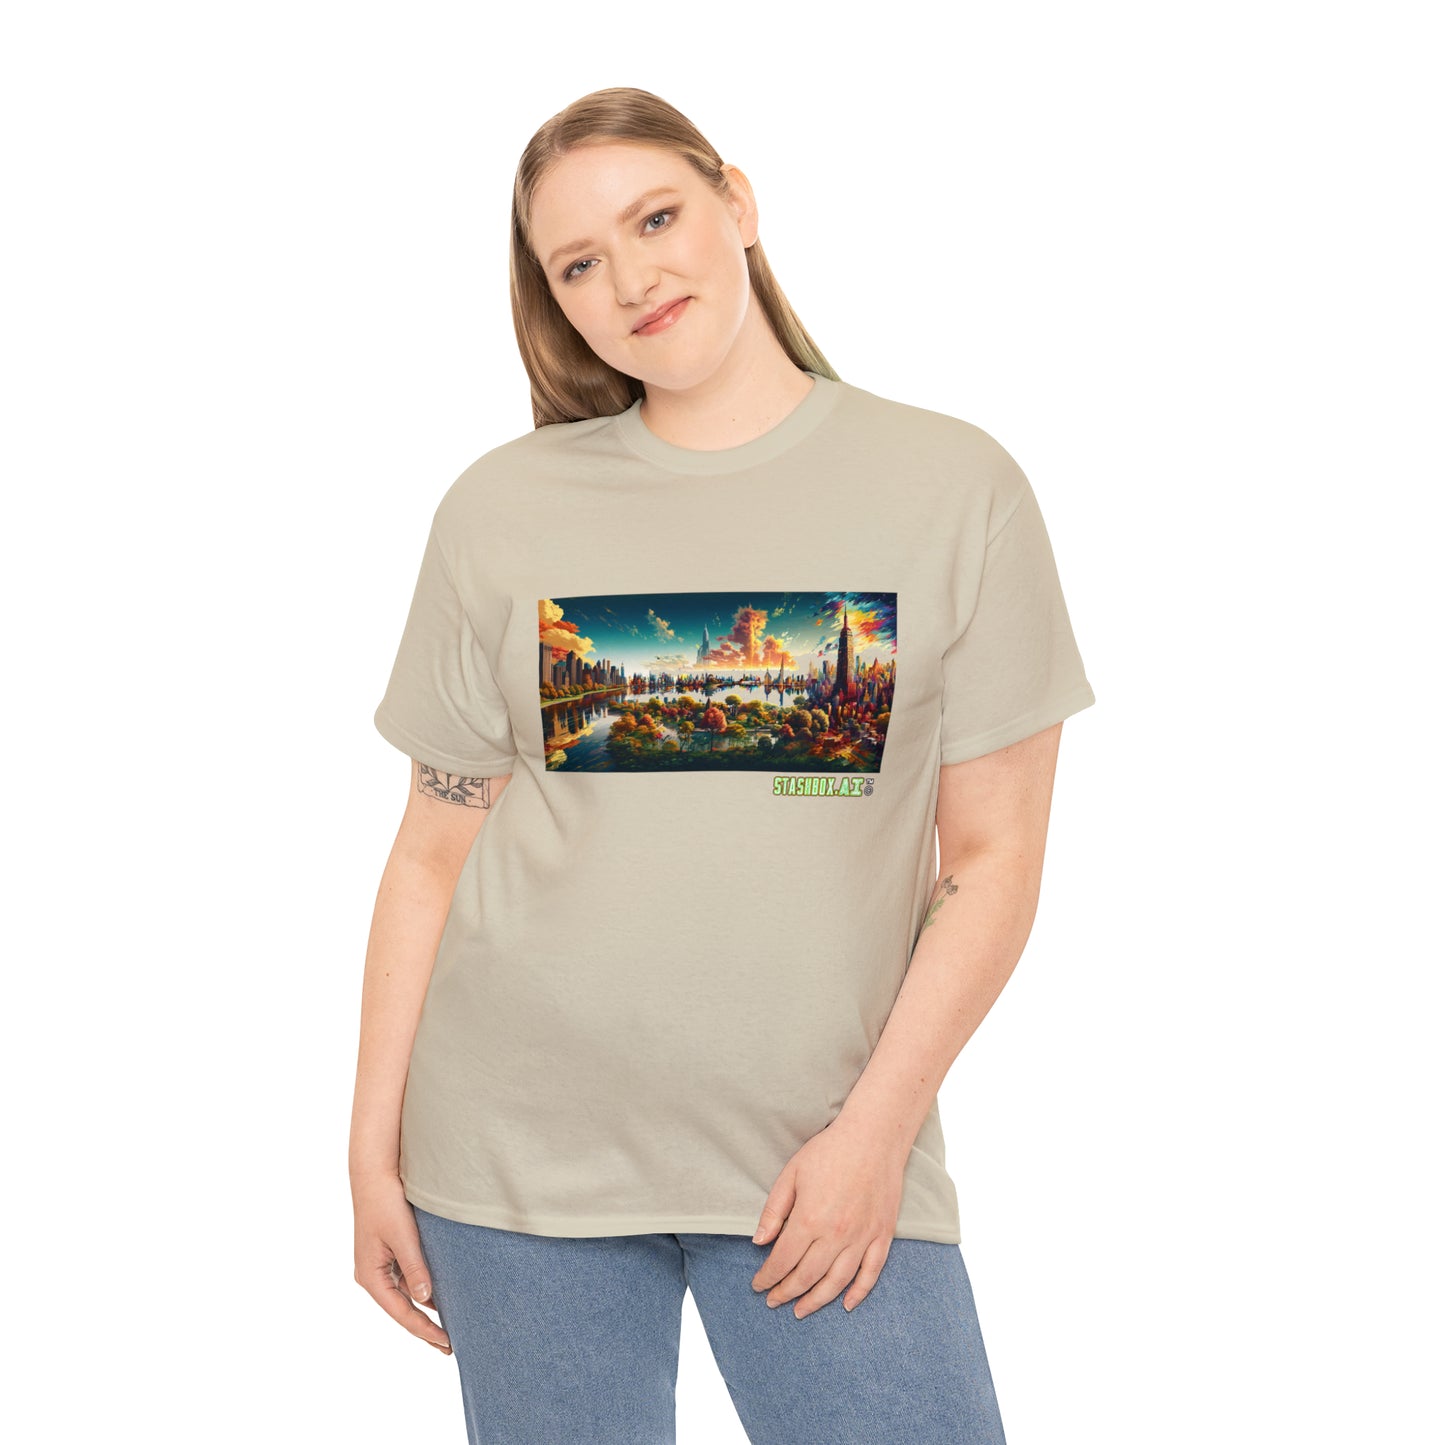 Unisex Heavy Cotton T-Shirt Dreamlike Illustration of a City New York 004